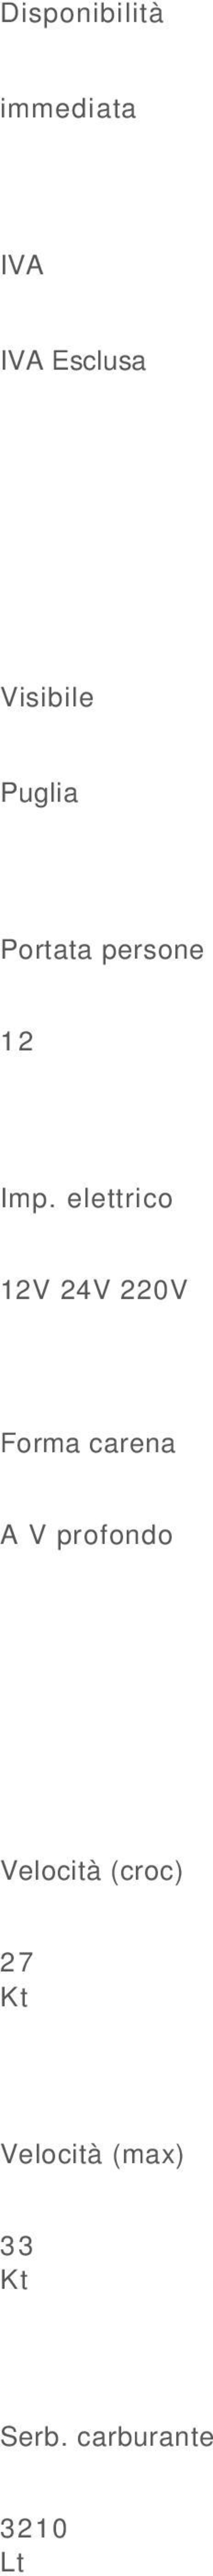 elettrico 12V 24V 220V Forma carena A V profondo